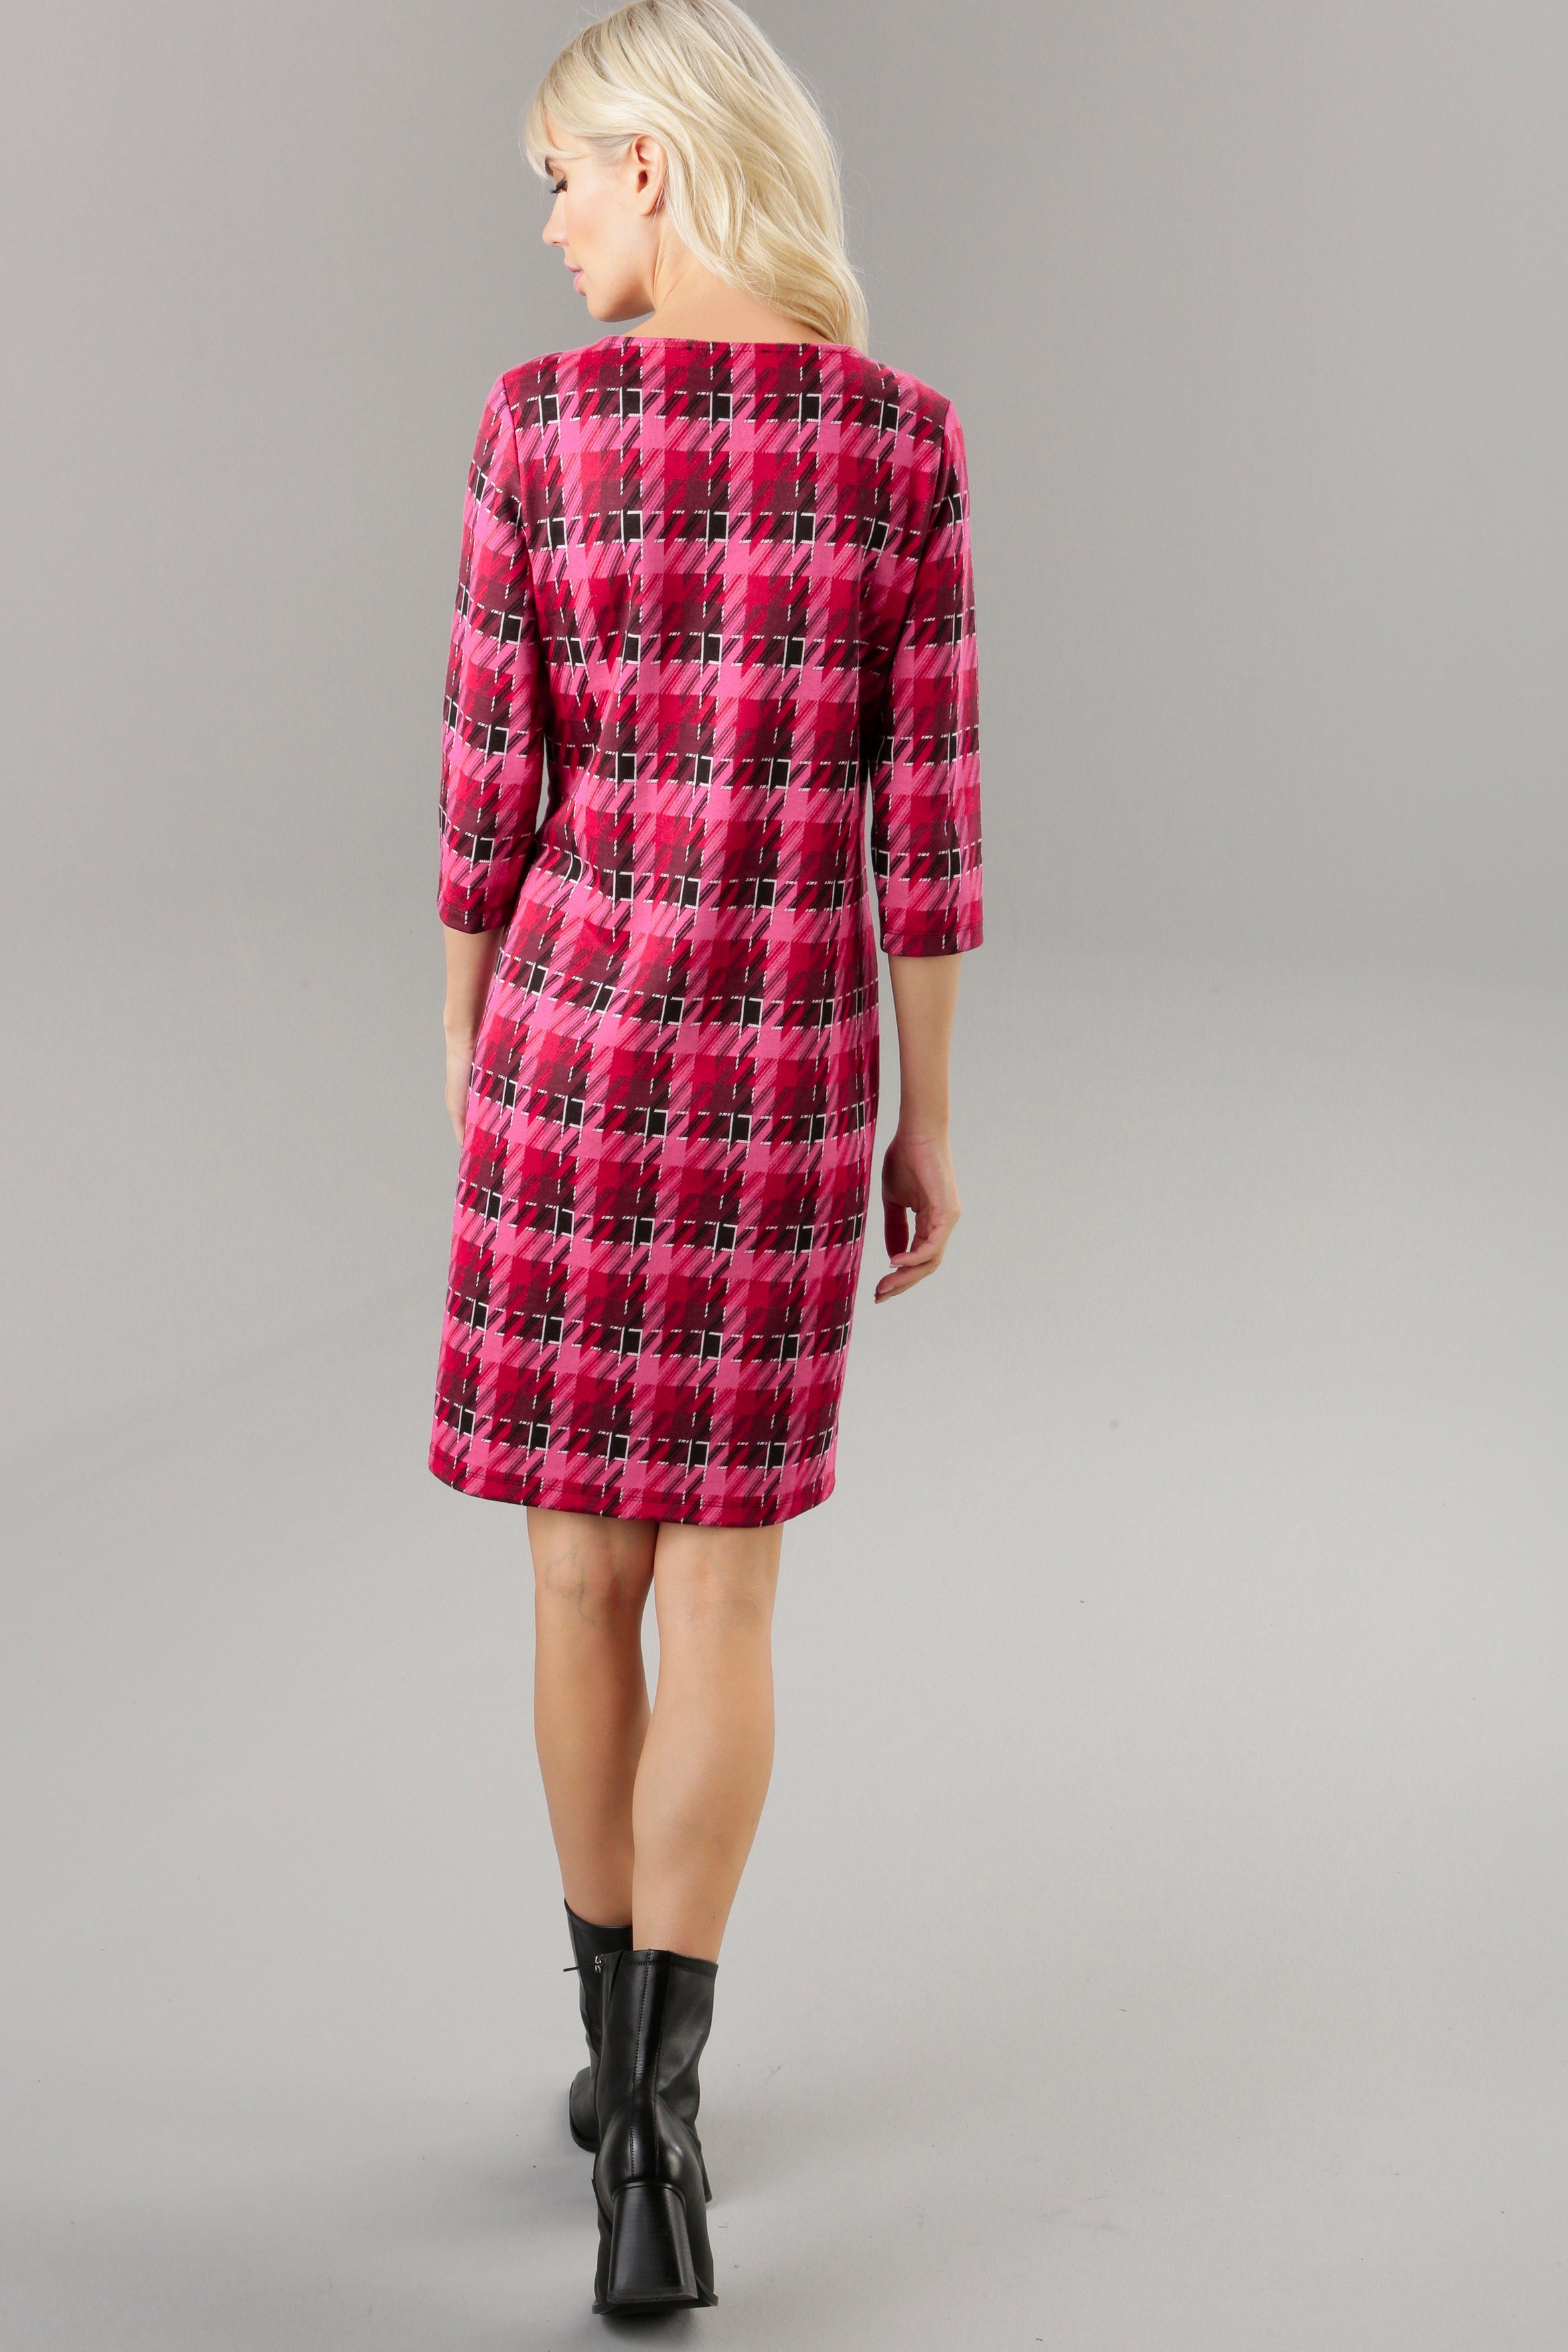 Aniston SELECTED Jerseykleid mit Allover-Muster trendy Knallfarben in